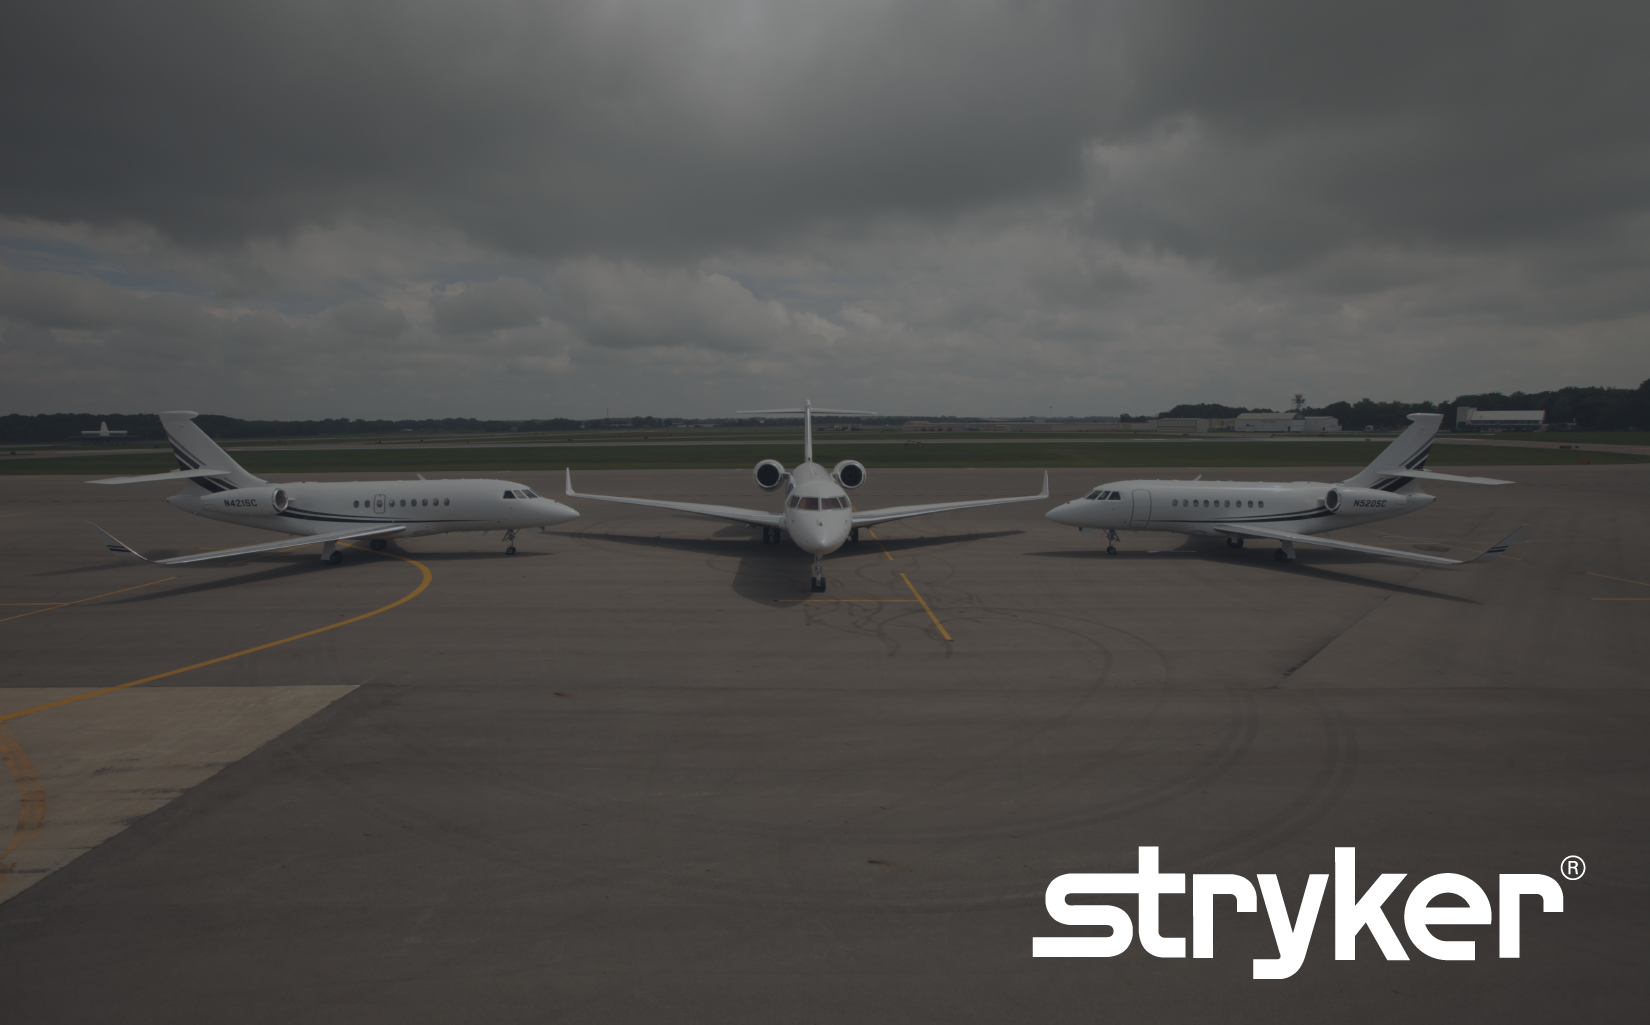 Stryker: Electronic Aircraft Maintenance [Case Study] - Veryon